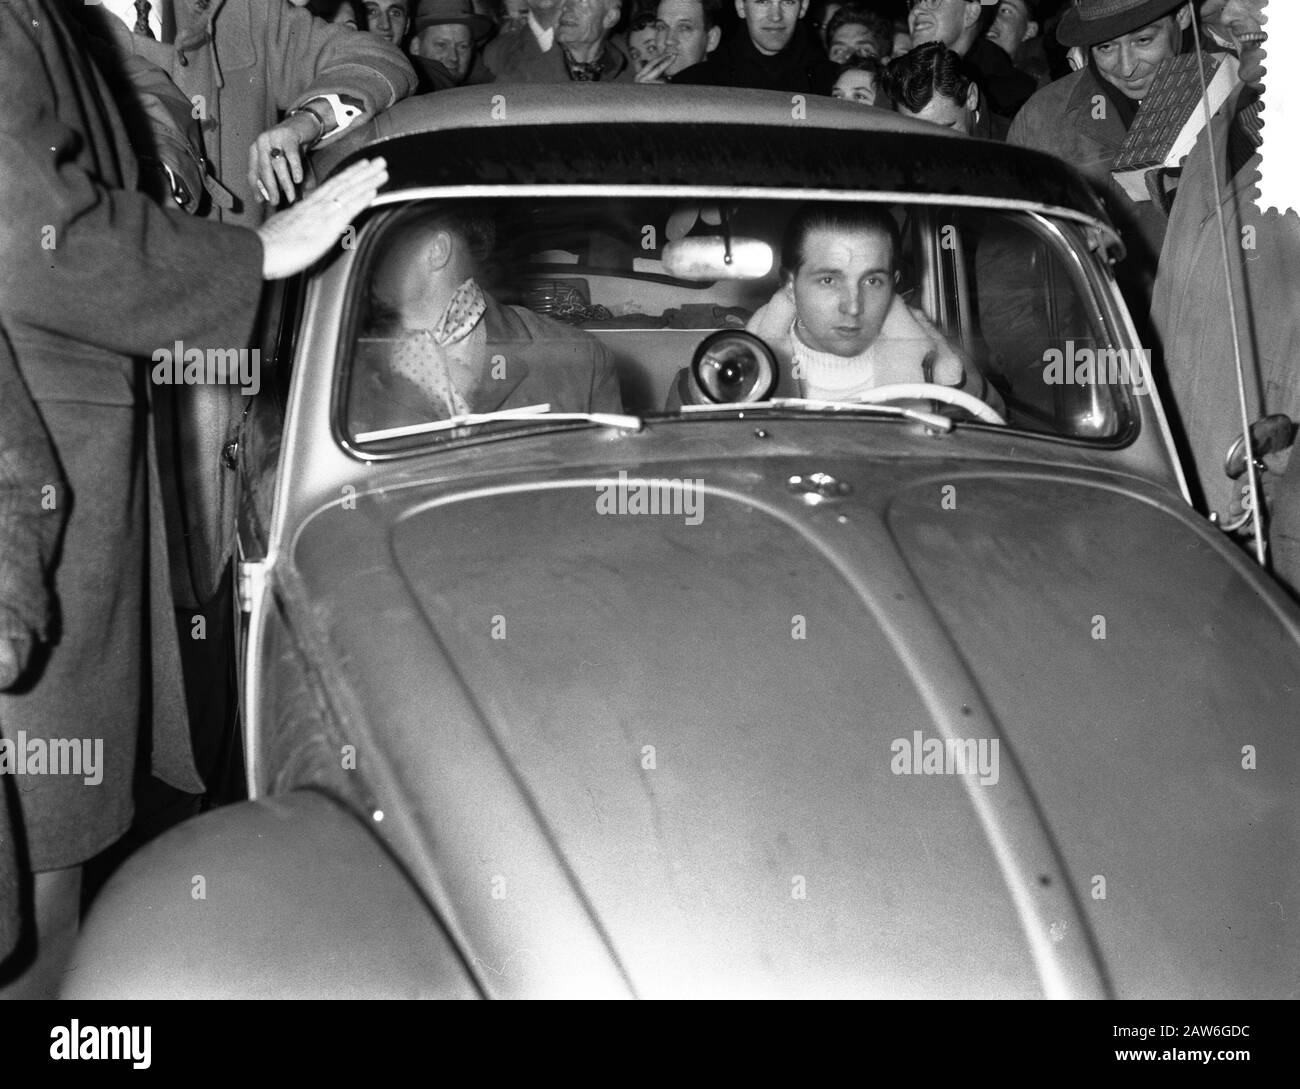 Rally Monte Carlo 1959 (HW Megens Jr. Ned..) Fellow rider BM Bremmers (Volkswagen) Date: January 18, 1959 Keywords: car rallies Person Name: B M. Bremmers, HW Megens Jr. Institution Name: Volkswagen Stock Photo